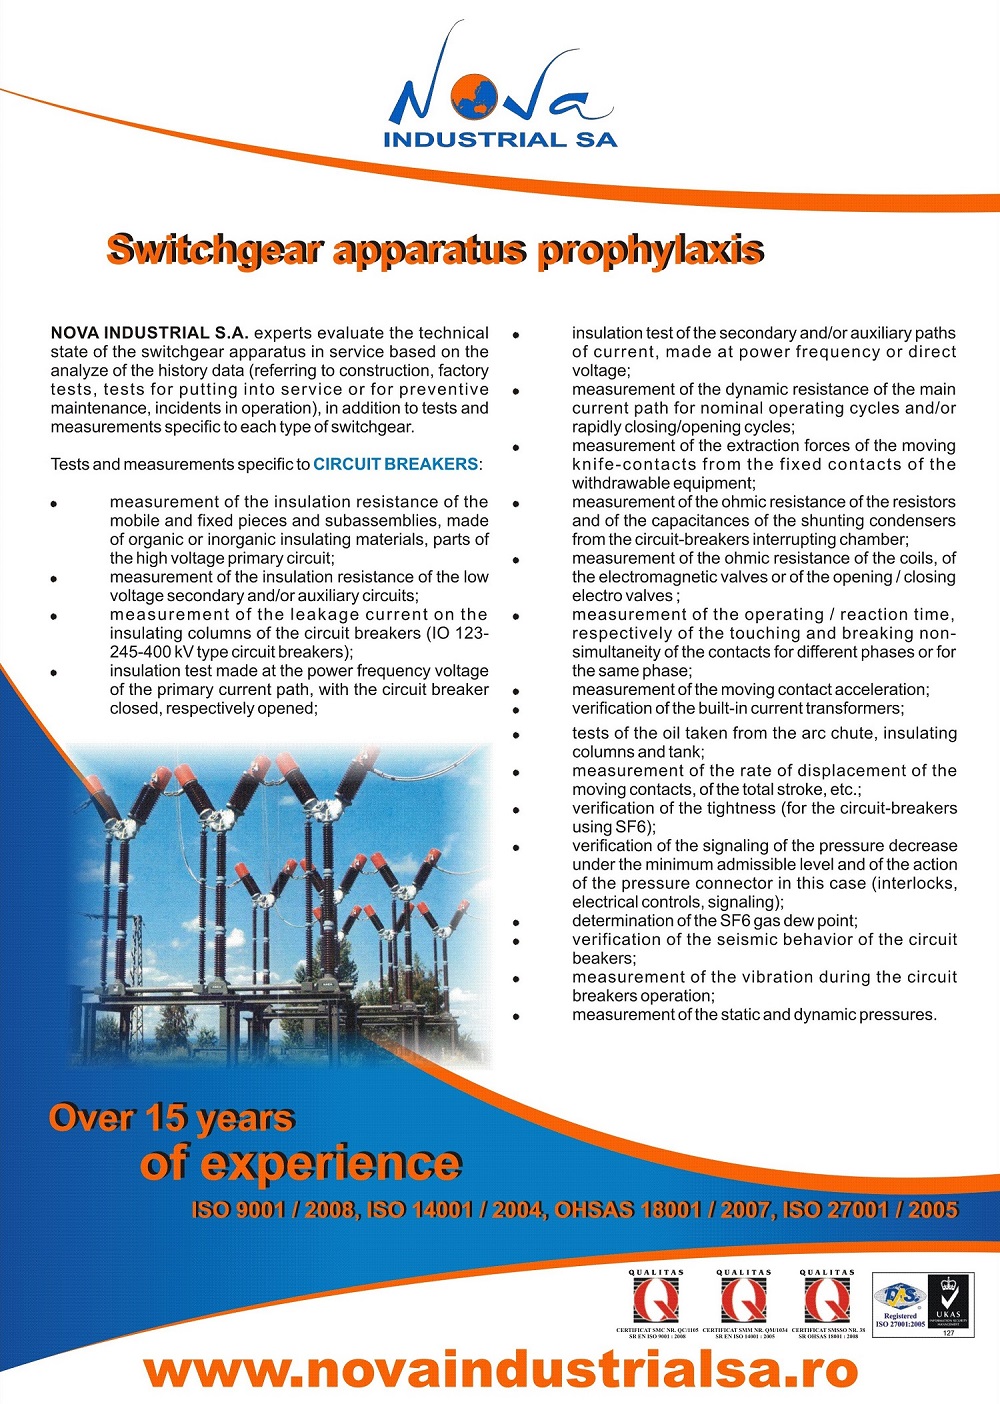 Switchgear apparatus prophylaxis (circuit breakers)